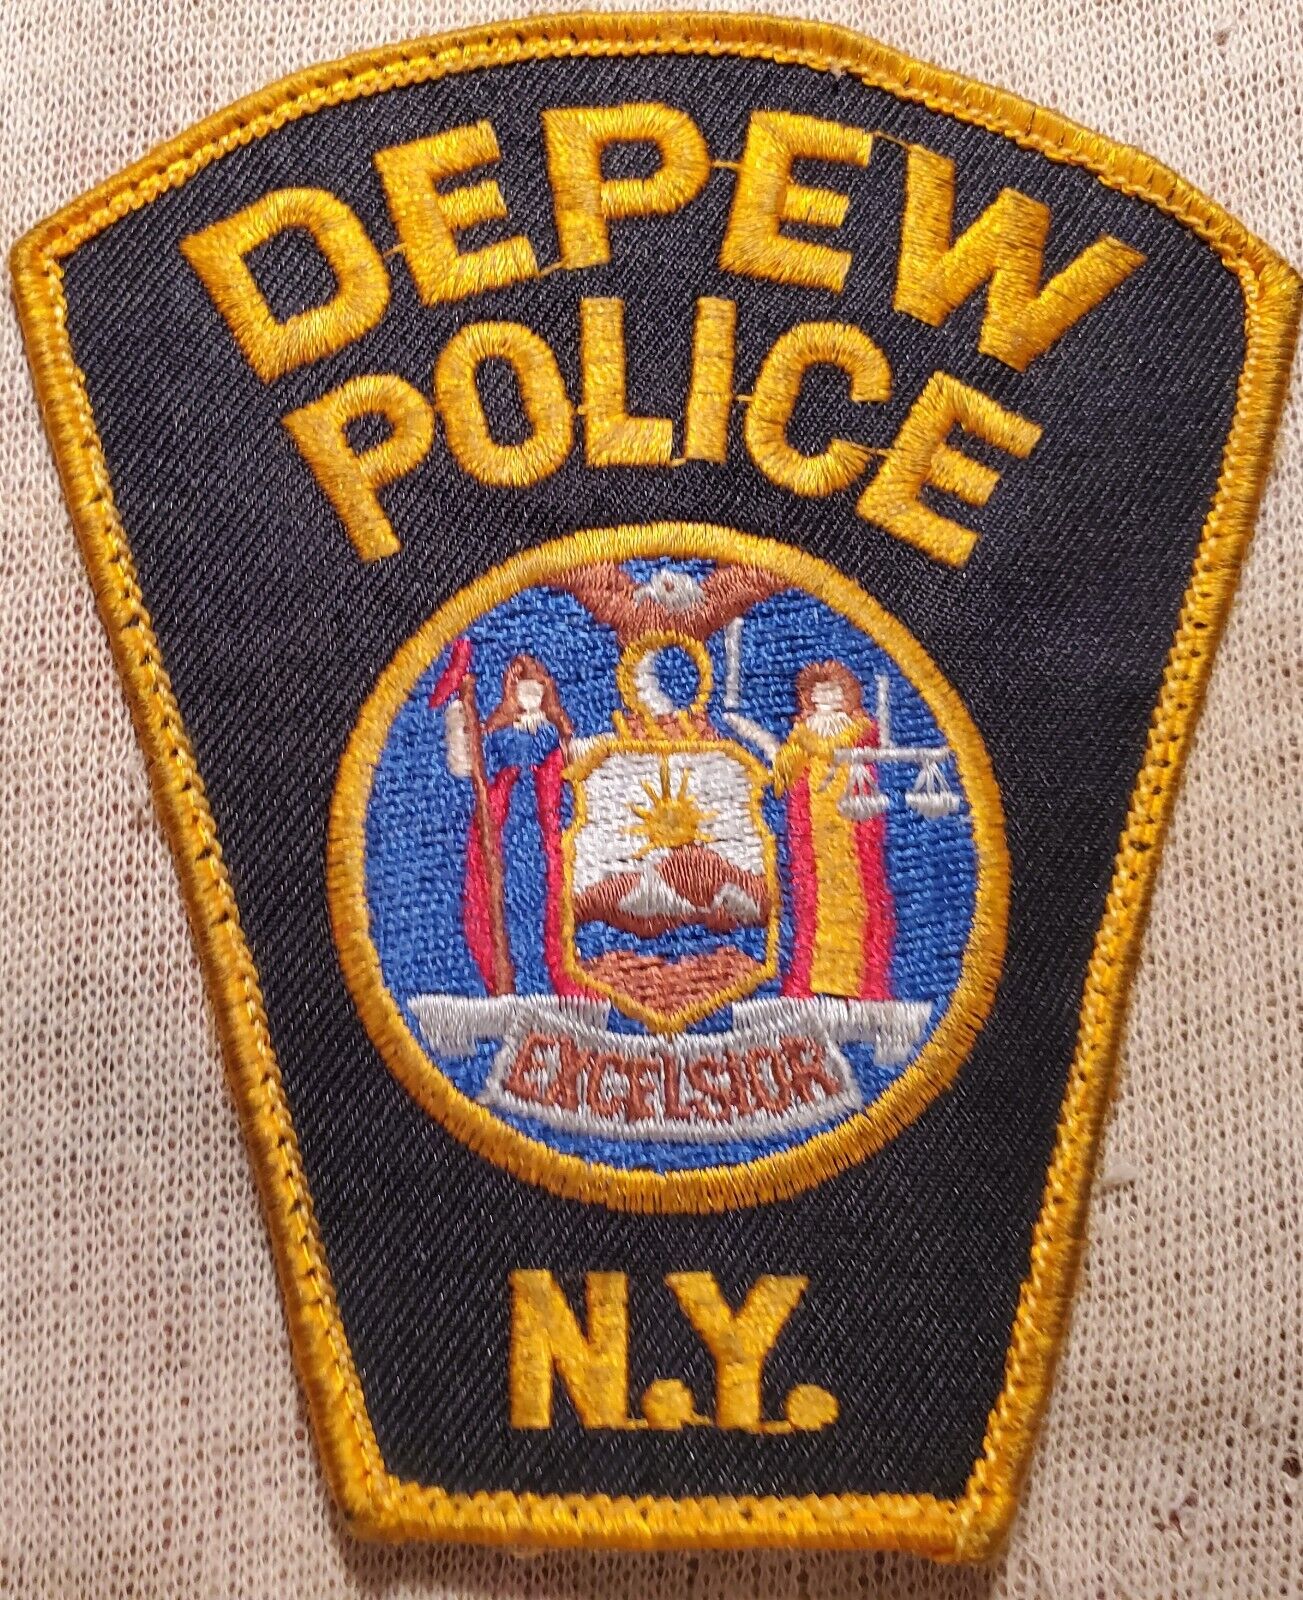 NY Village of Depew New York Police Shoulder Patch